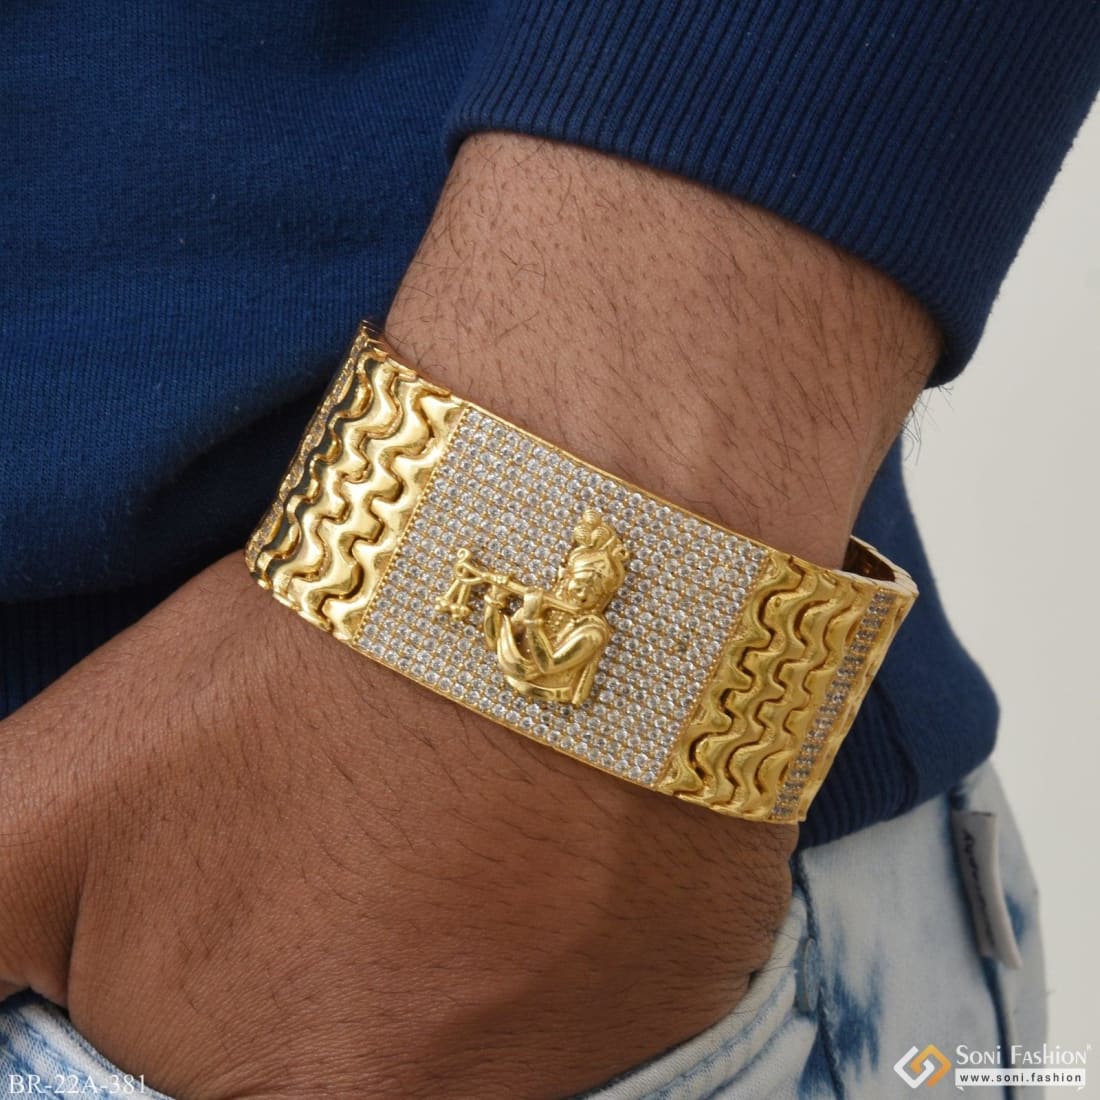 Men's Bracelet with Engraving - Men's Platinum Jewelry | ByEnzo